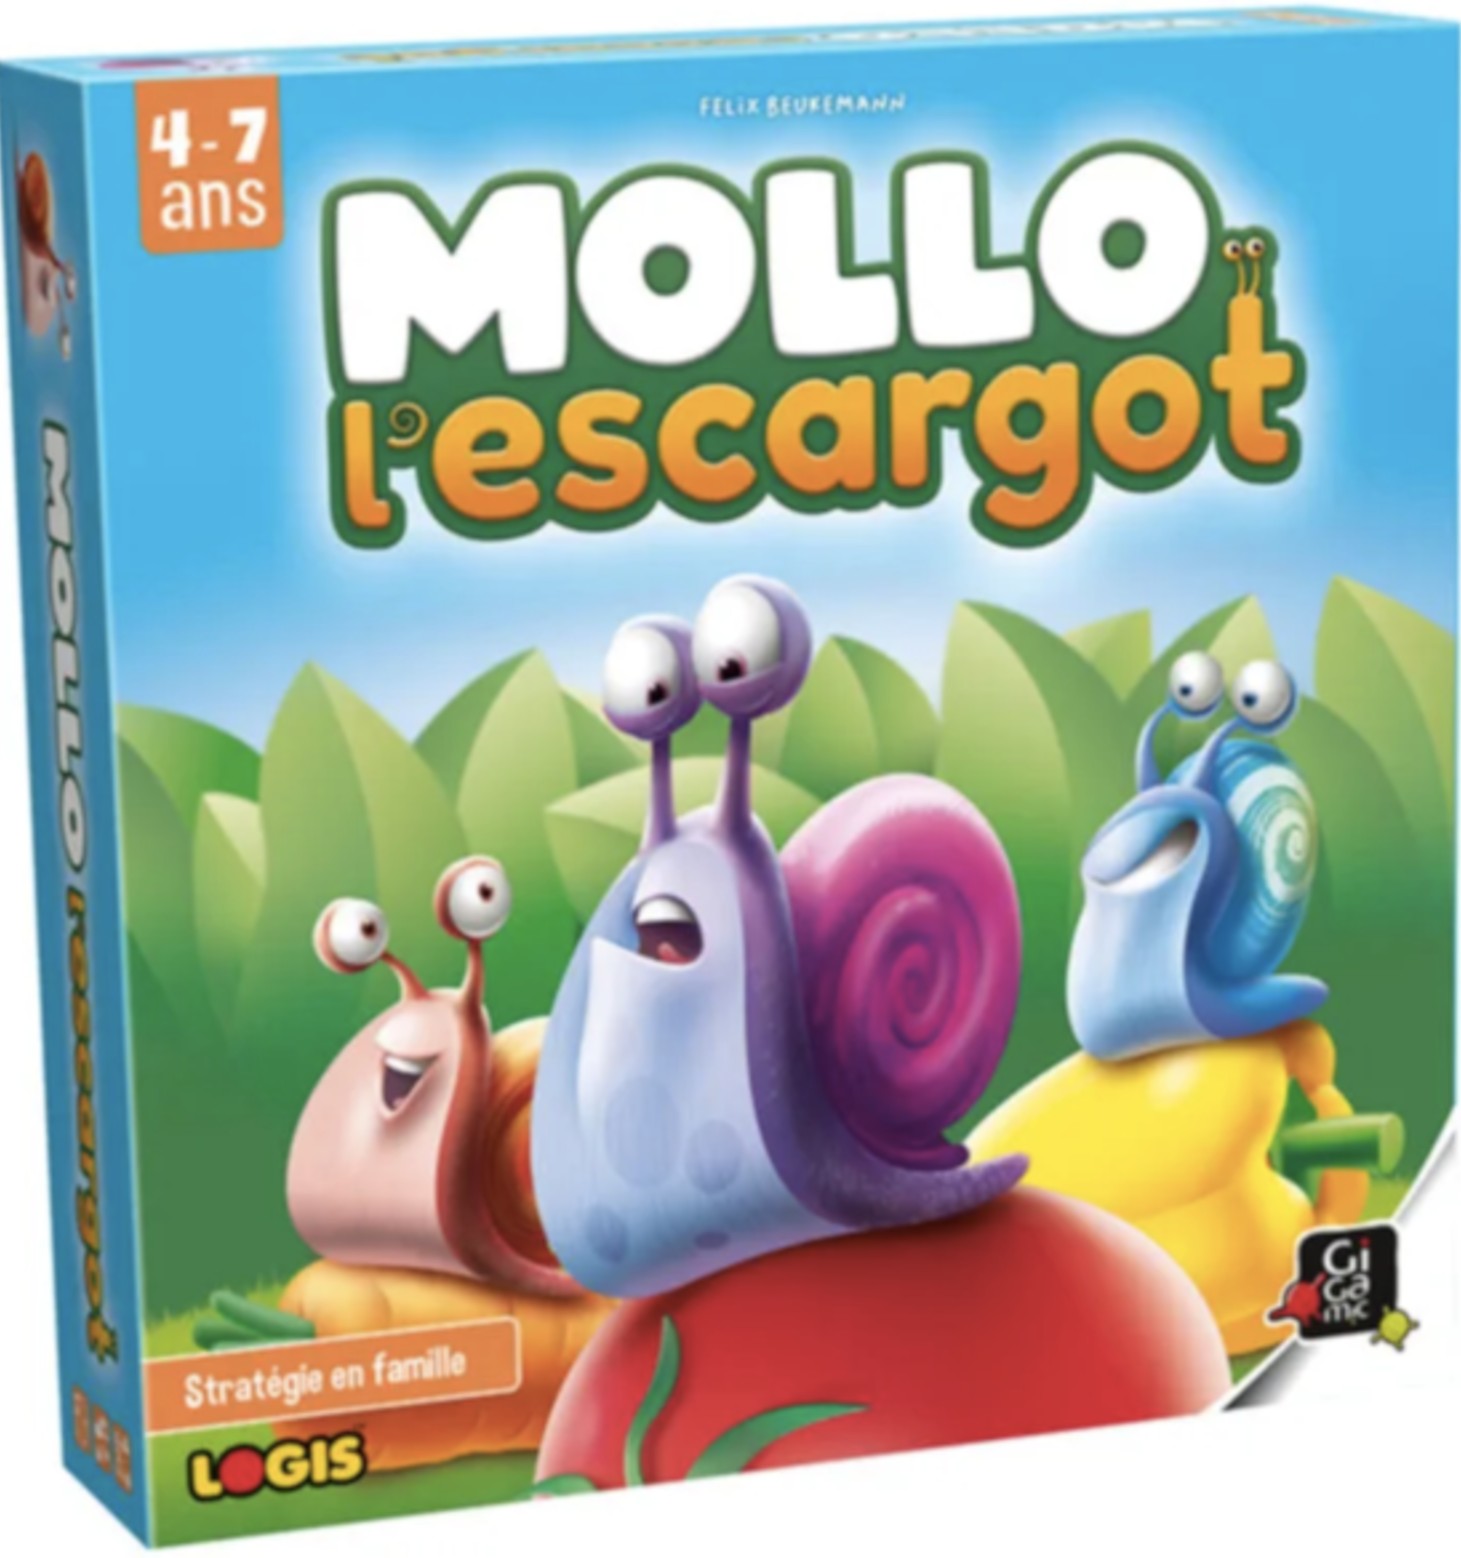 Boîte du jeu Mollo l'Escargot